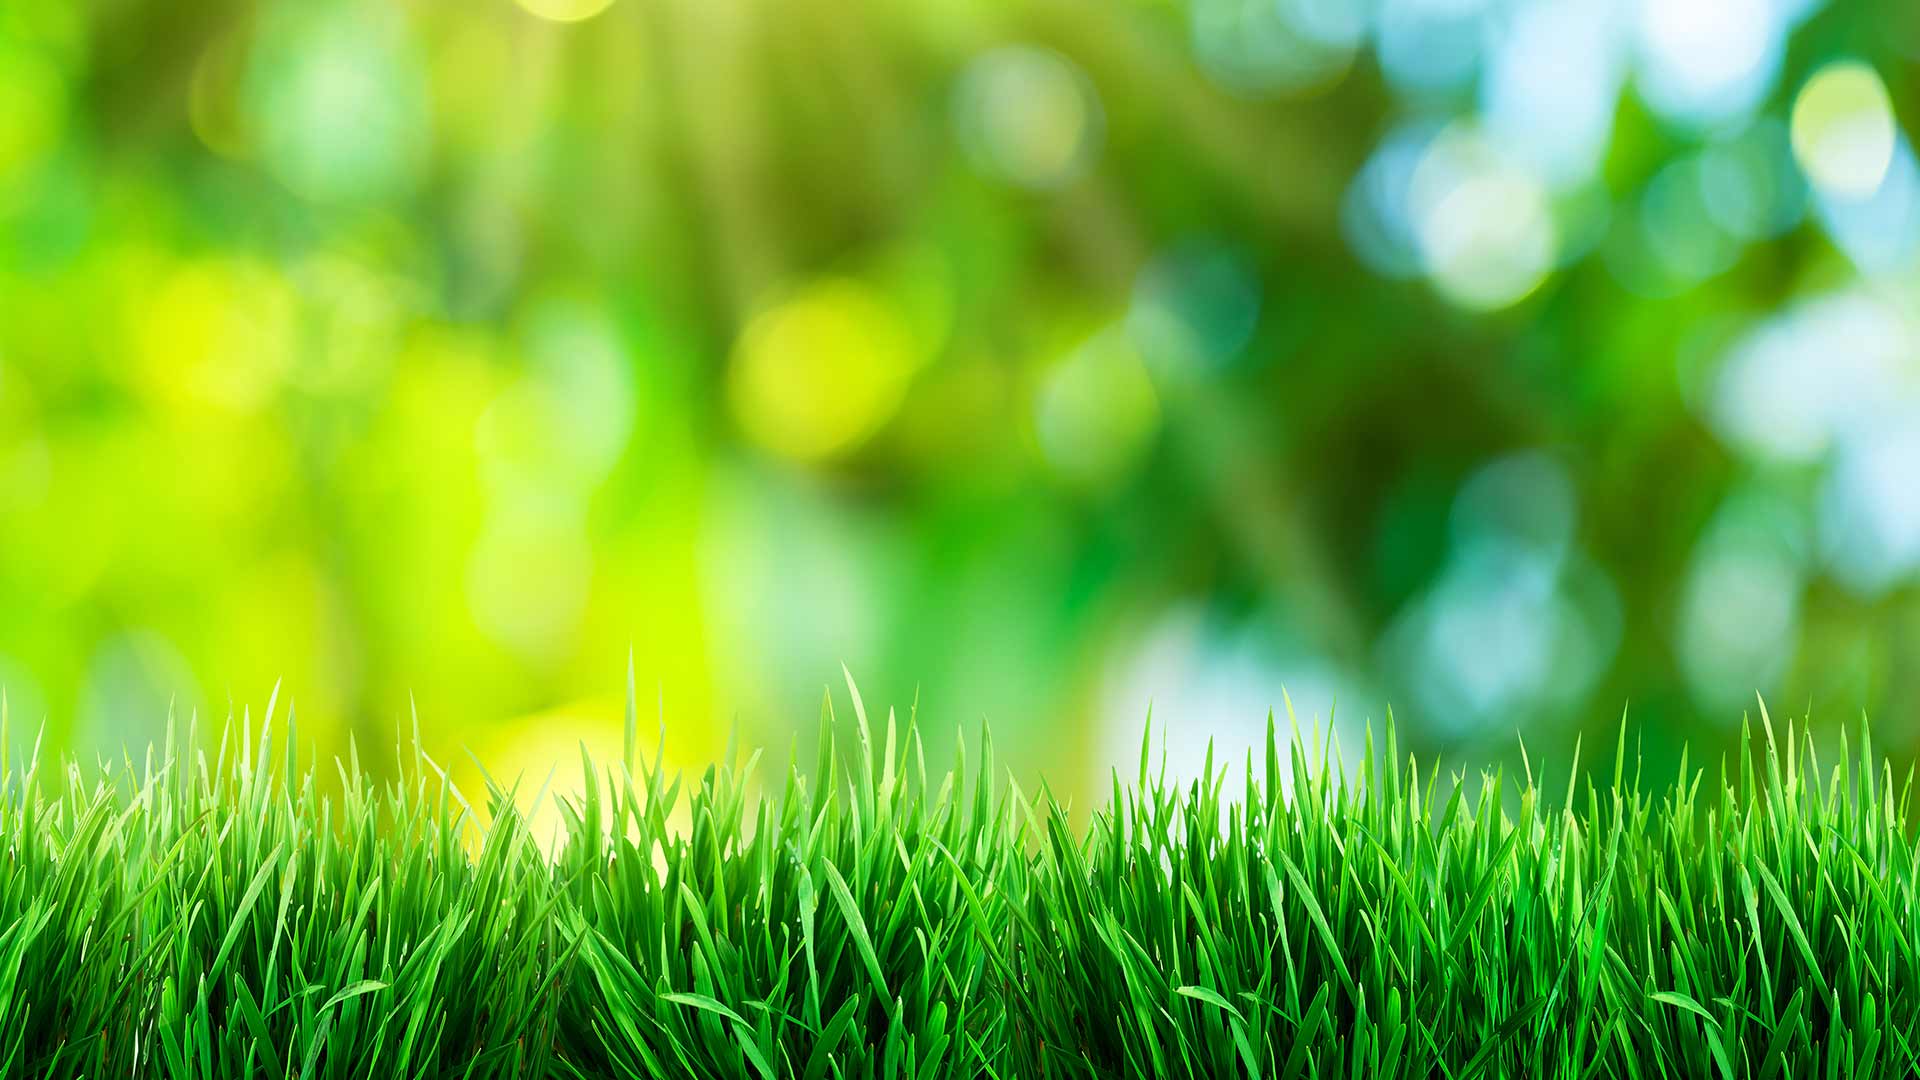 Beautiful grass in sunshine near Mansfield, OH.